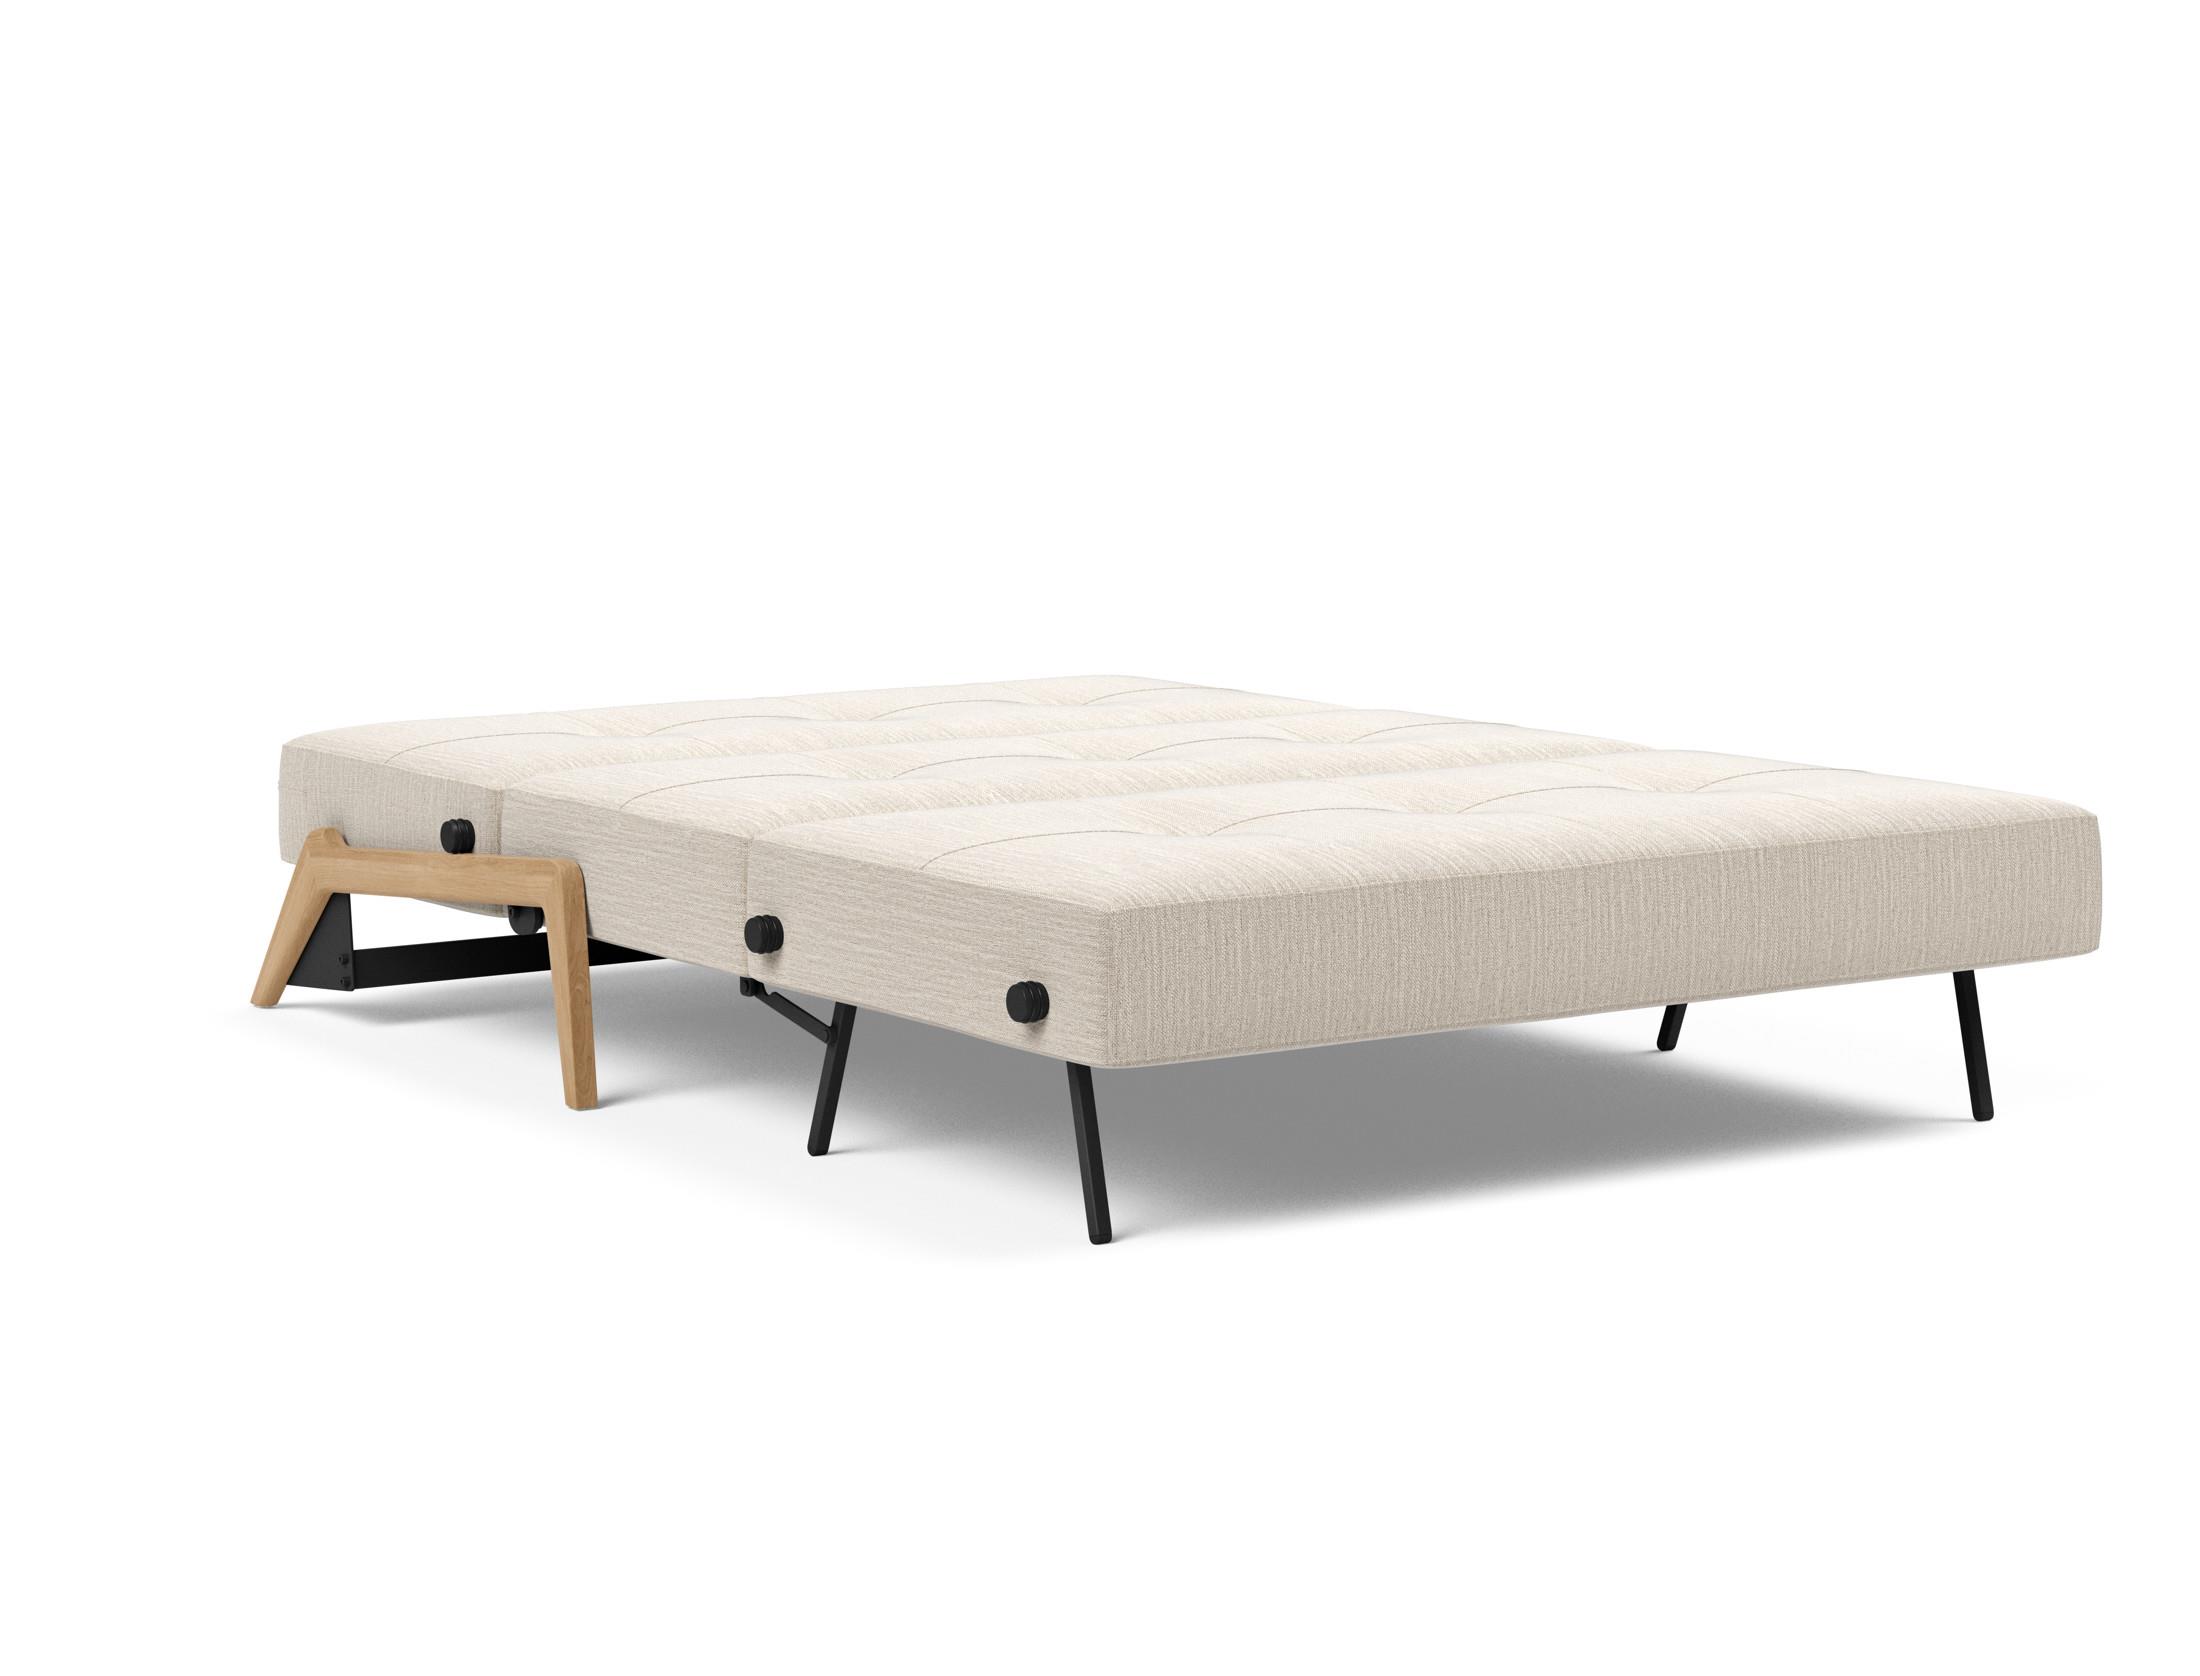 Диван Cubed 140 Innovation. Innovation Cubed 140 Wood. Диван - Cubed 160 Wood Sofa Bed. Innovation Cubed 140 528 Wood.